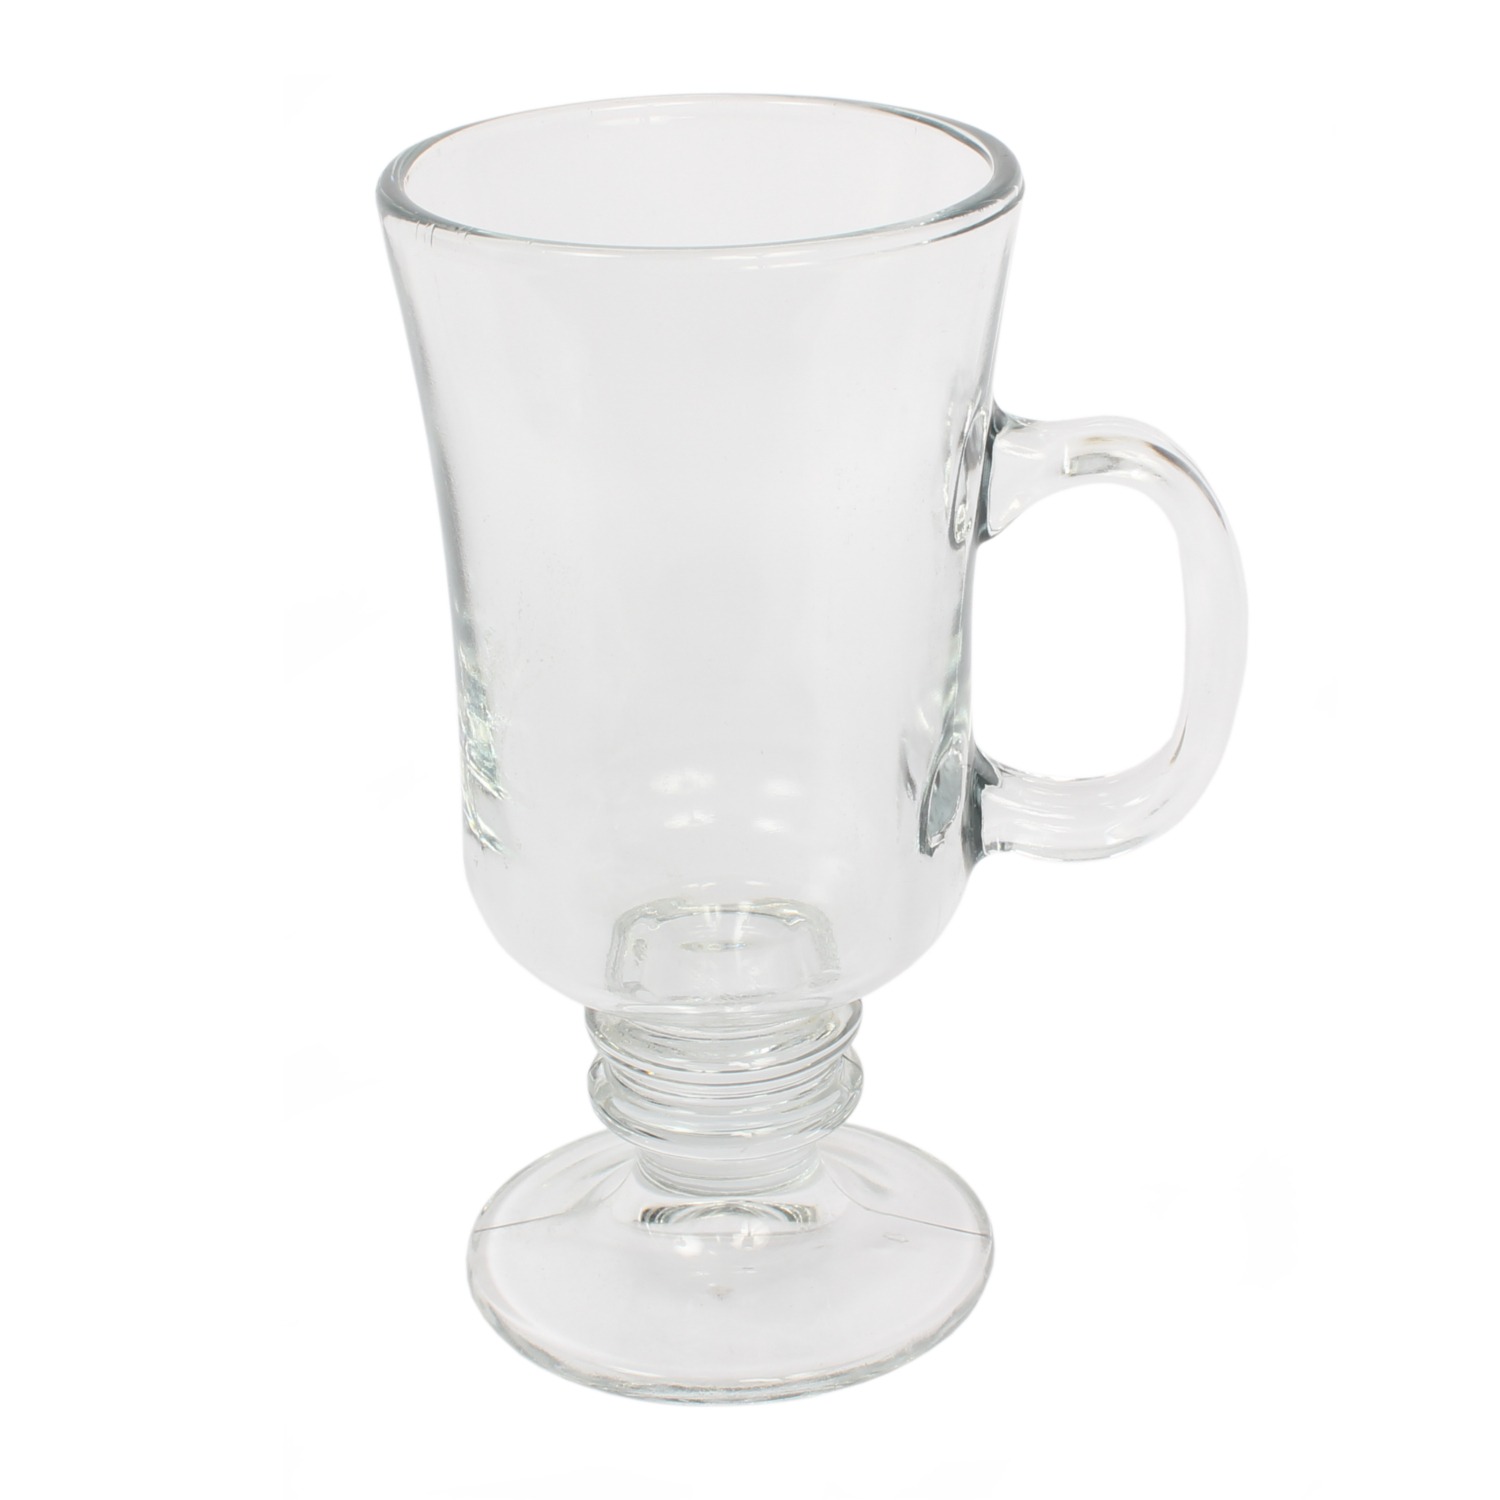 https://www.thetamales.com/wp-content/uploads/2020/02/glassware-latte-glass-250ml.jpg